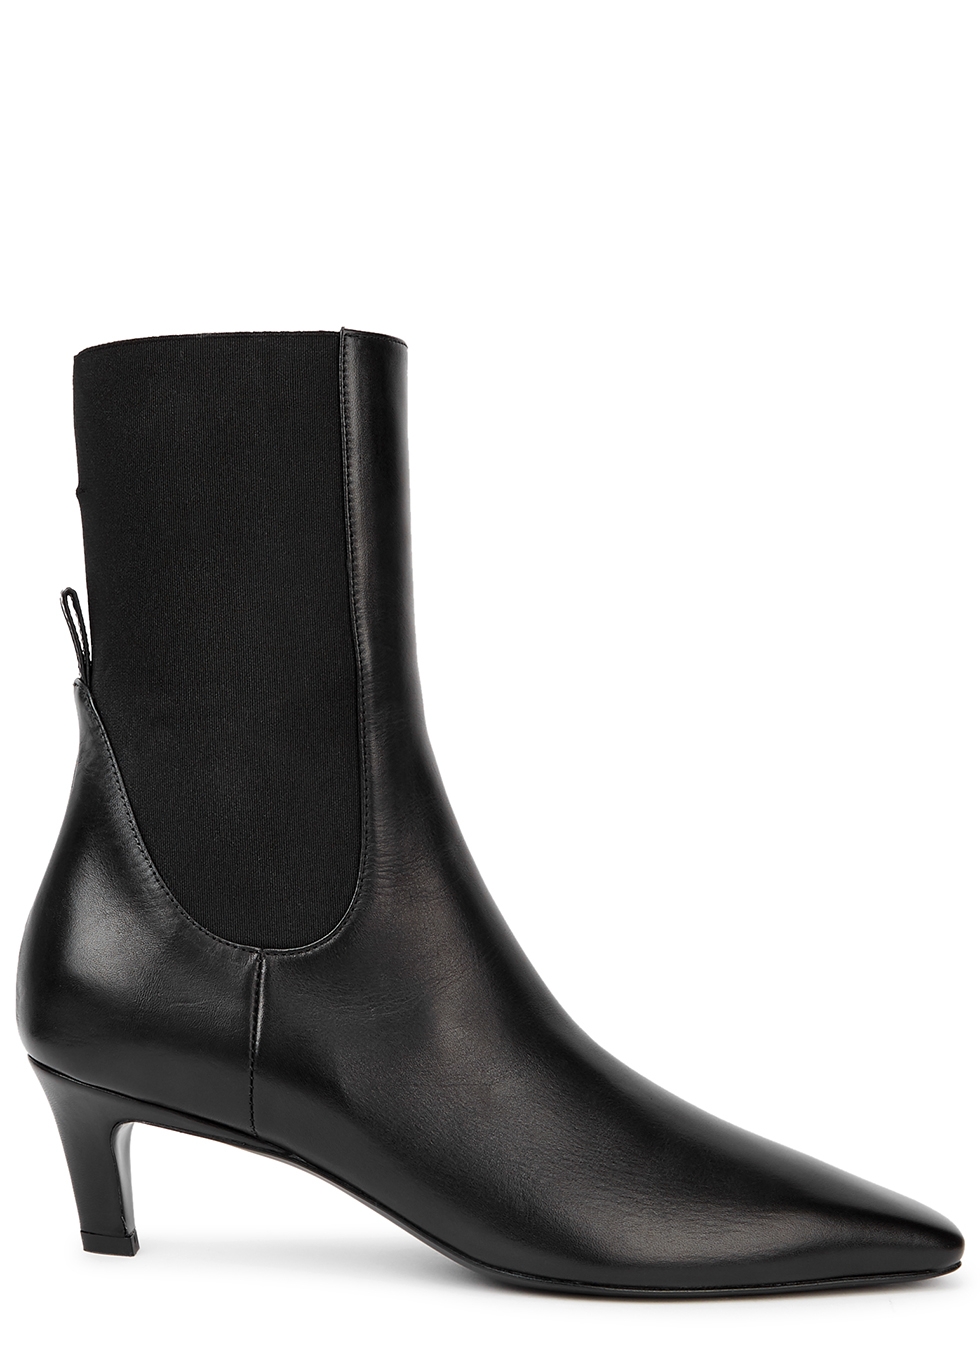 Totême The Mid Heel black leather ankle boots - Harvey Nichols